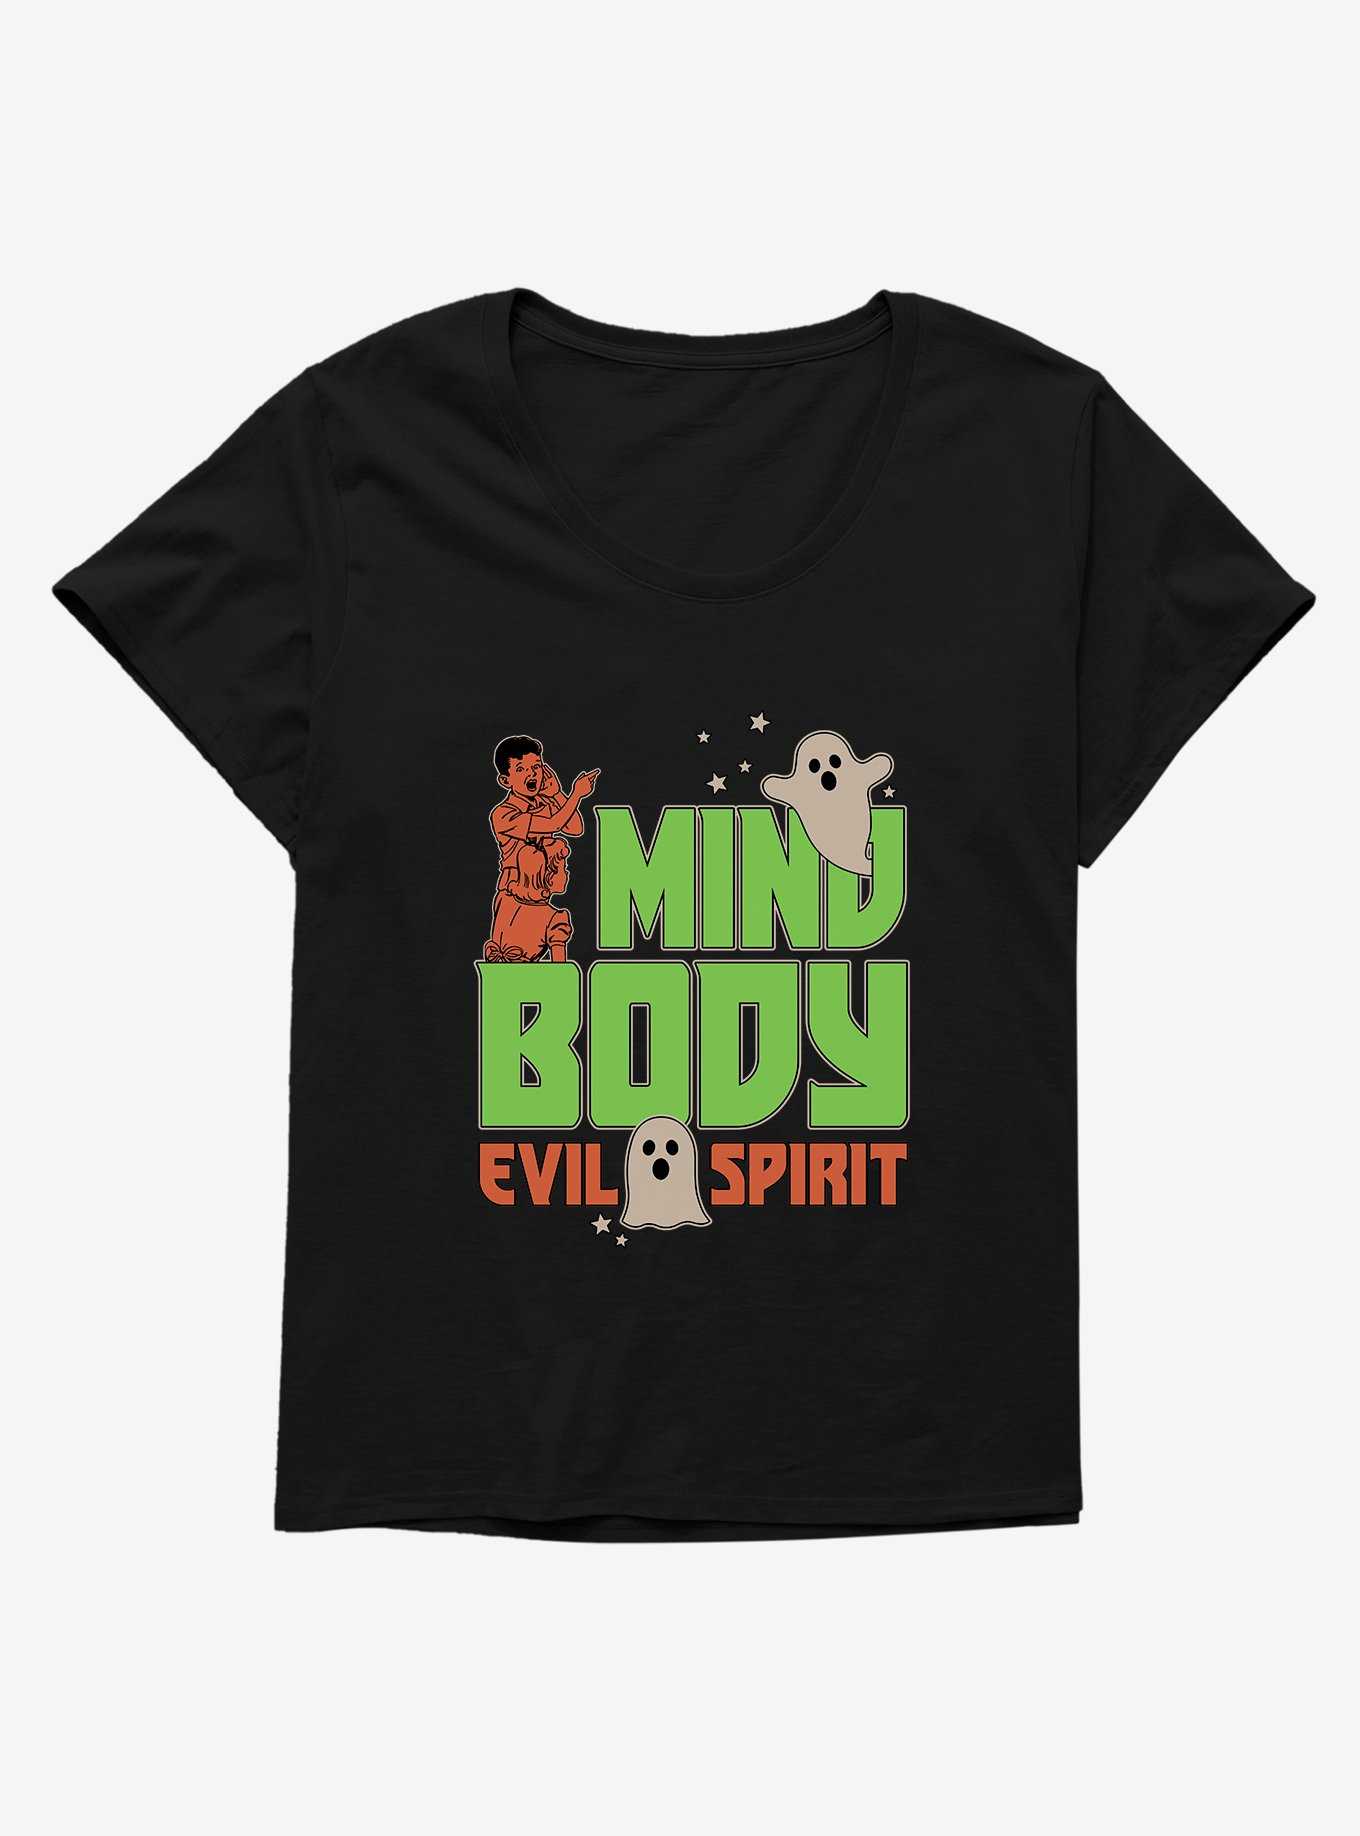 Halloween Mind, Body, Evil Spirit Plus Size T-Shirt, , hi-res